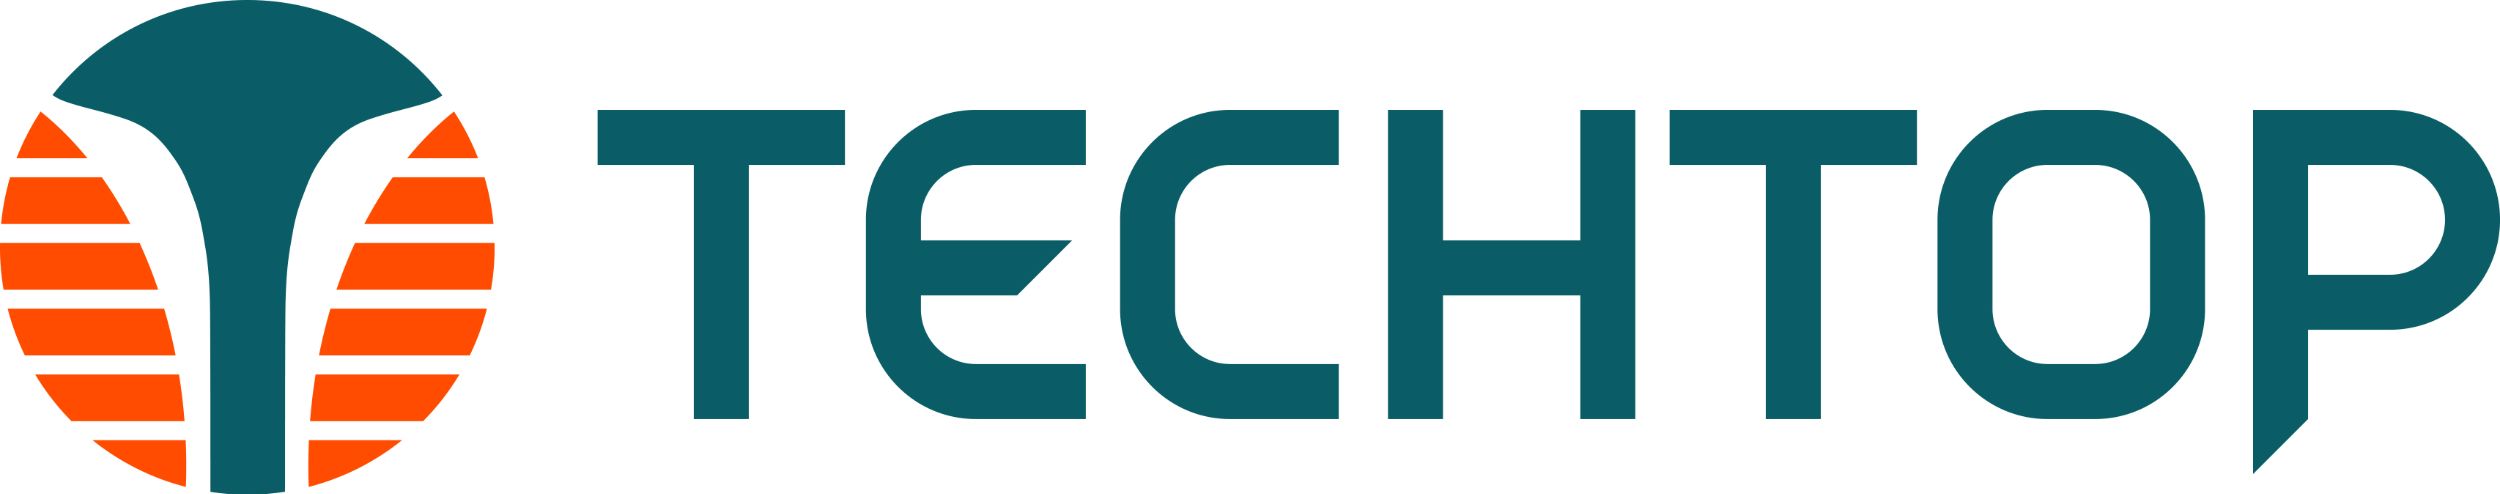 Techtop-Logo_RGB - WEB.jpg